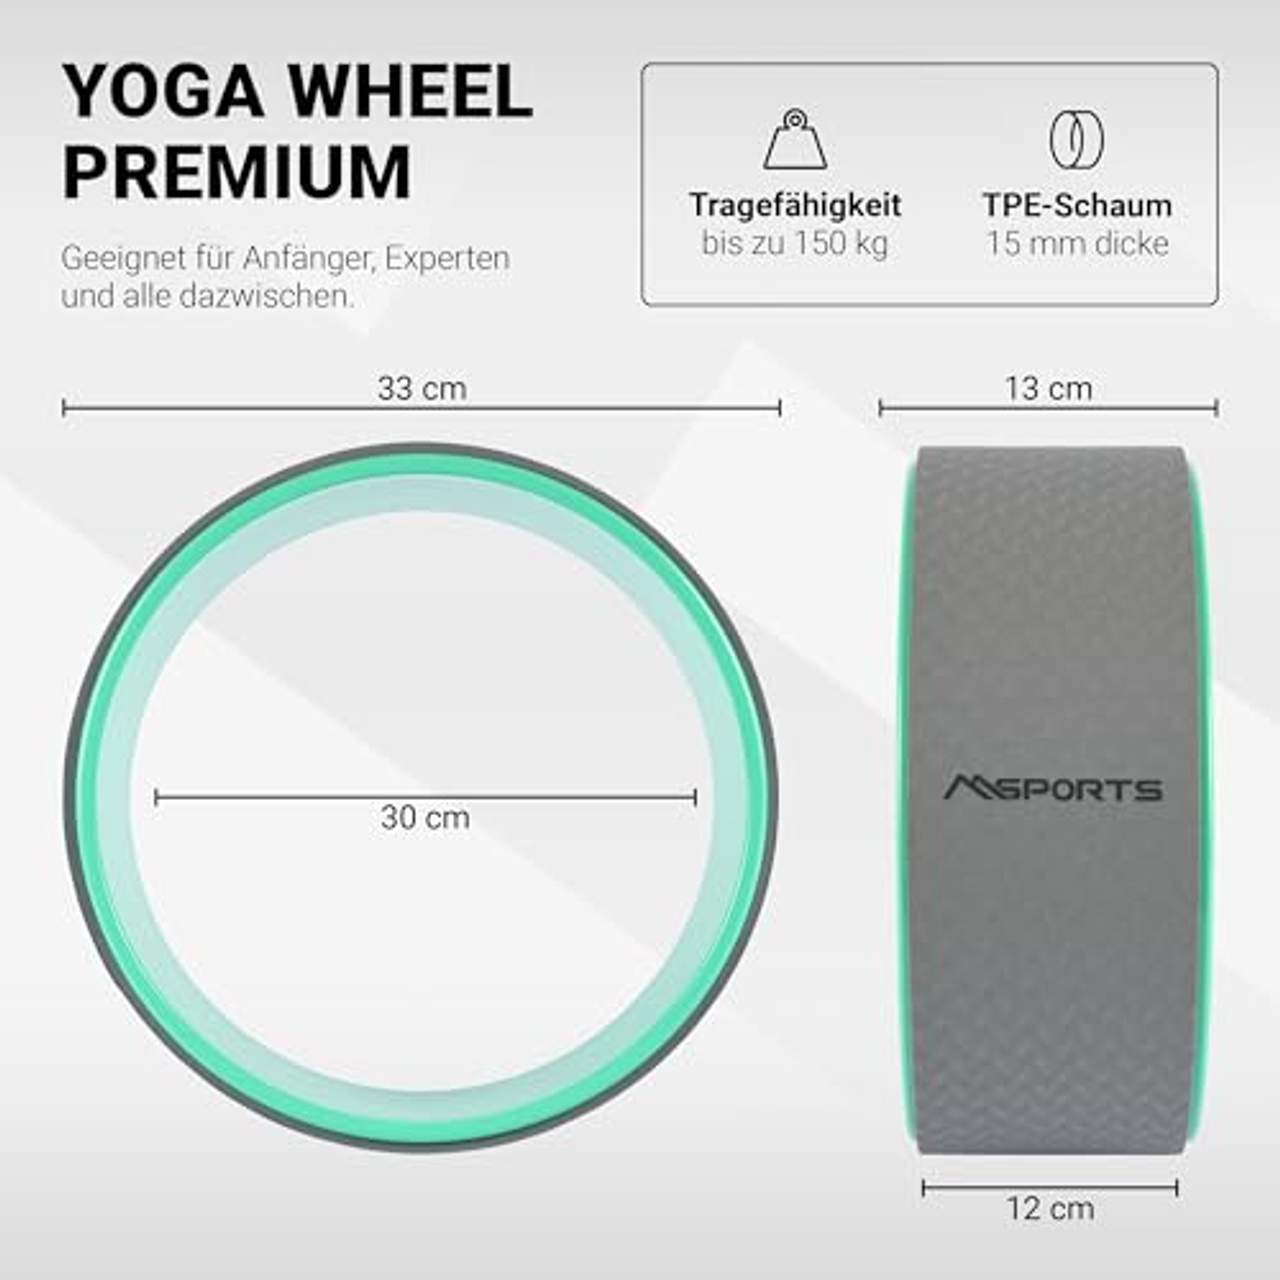 MSPORTS Yoga Wheel Professional